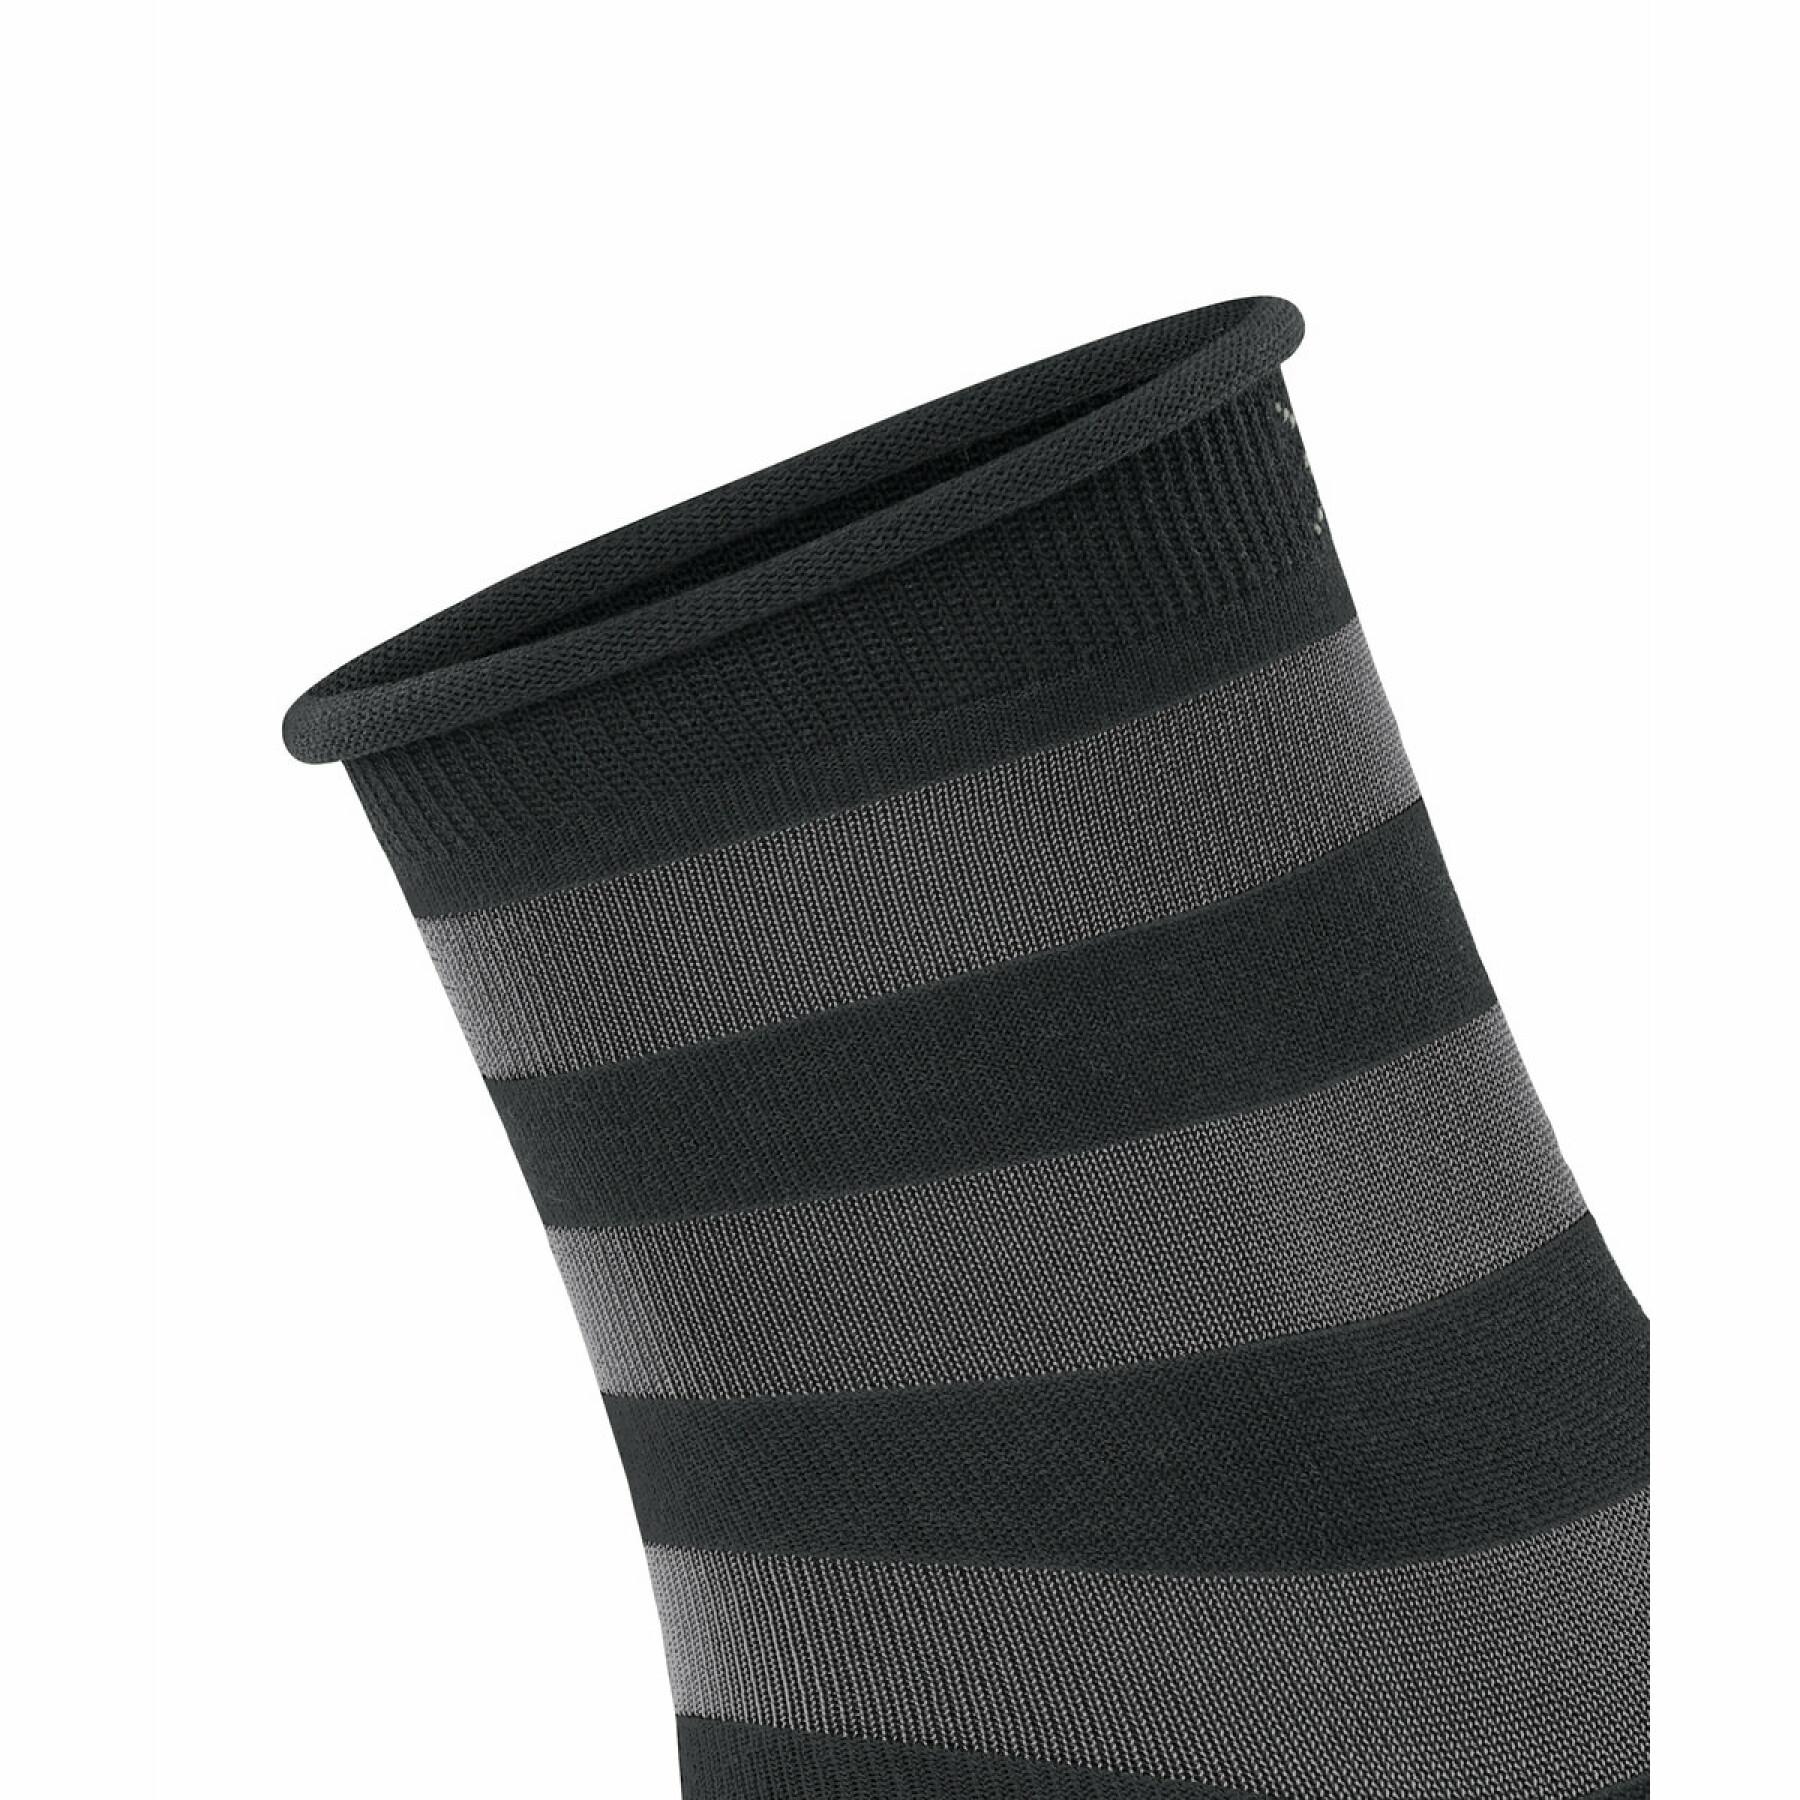 Socken für Damen Burlington Aberdeen